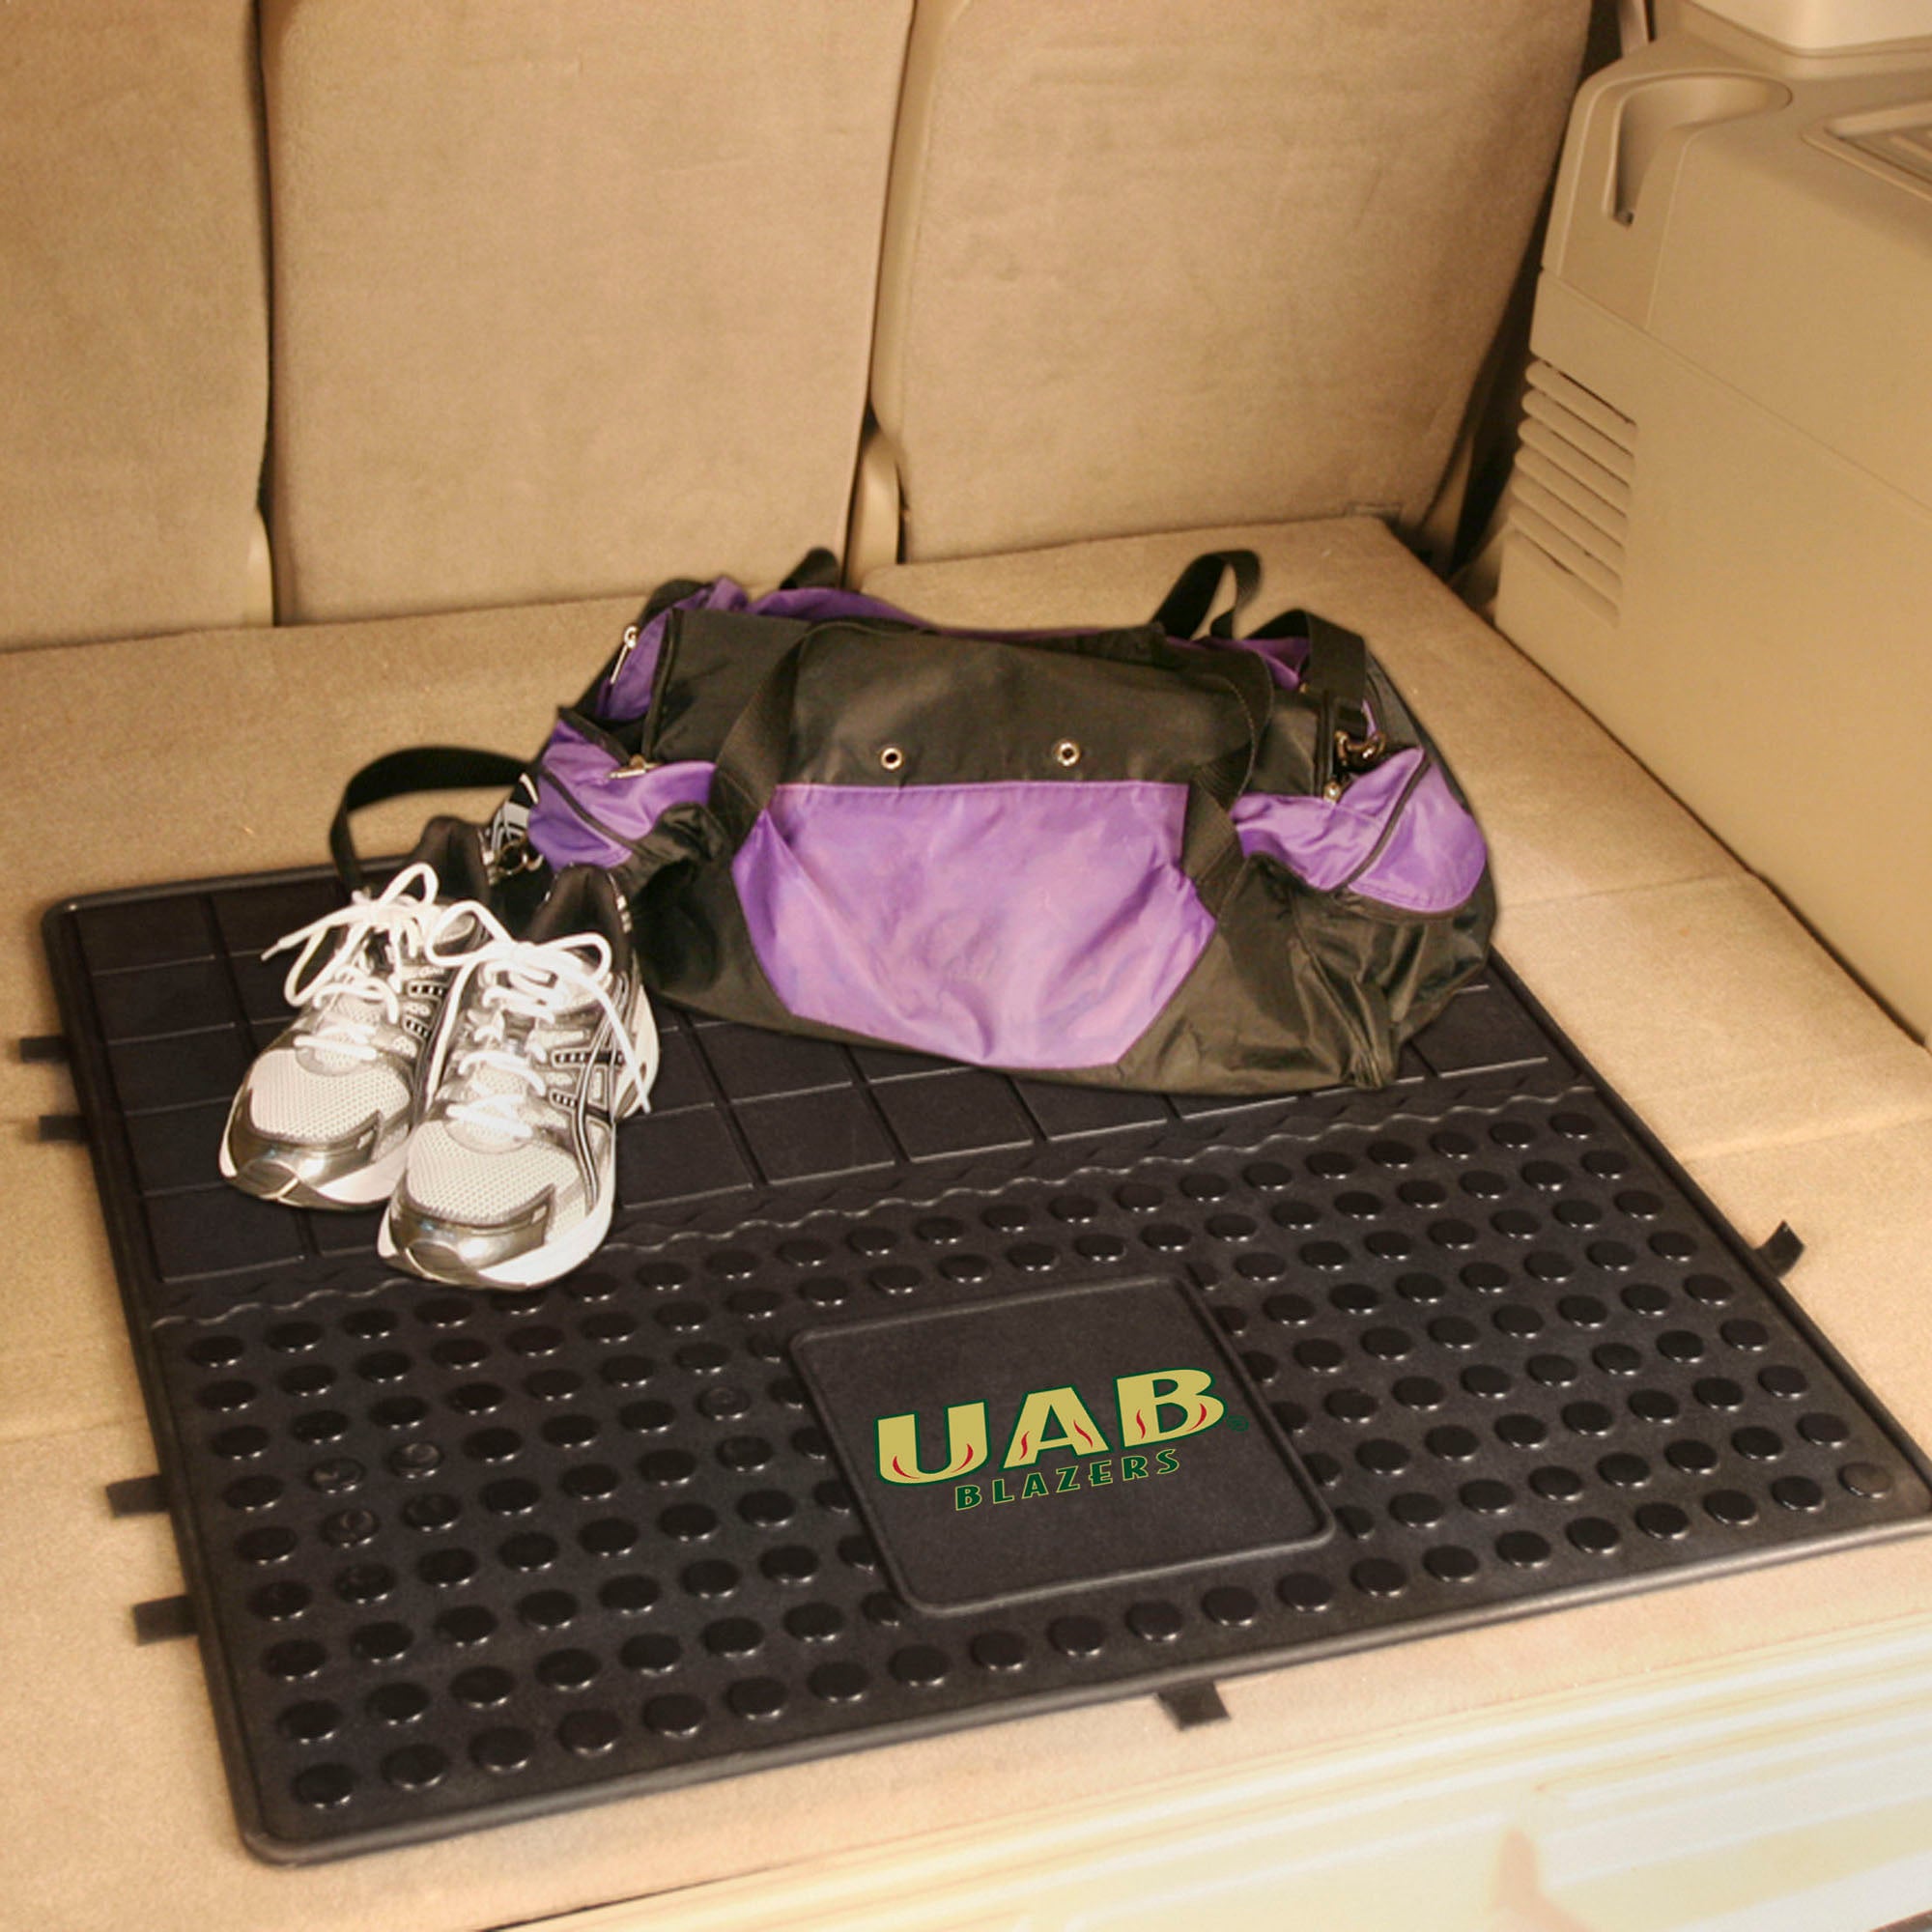 UAB Blazers Heavy Duty Vinyl Cargo Mat 31